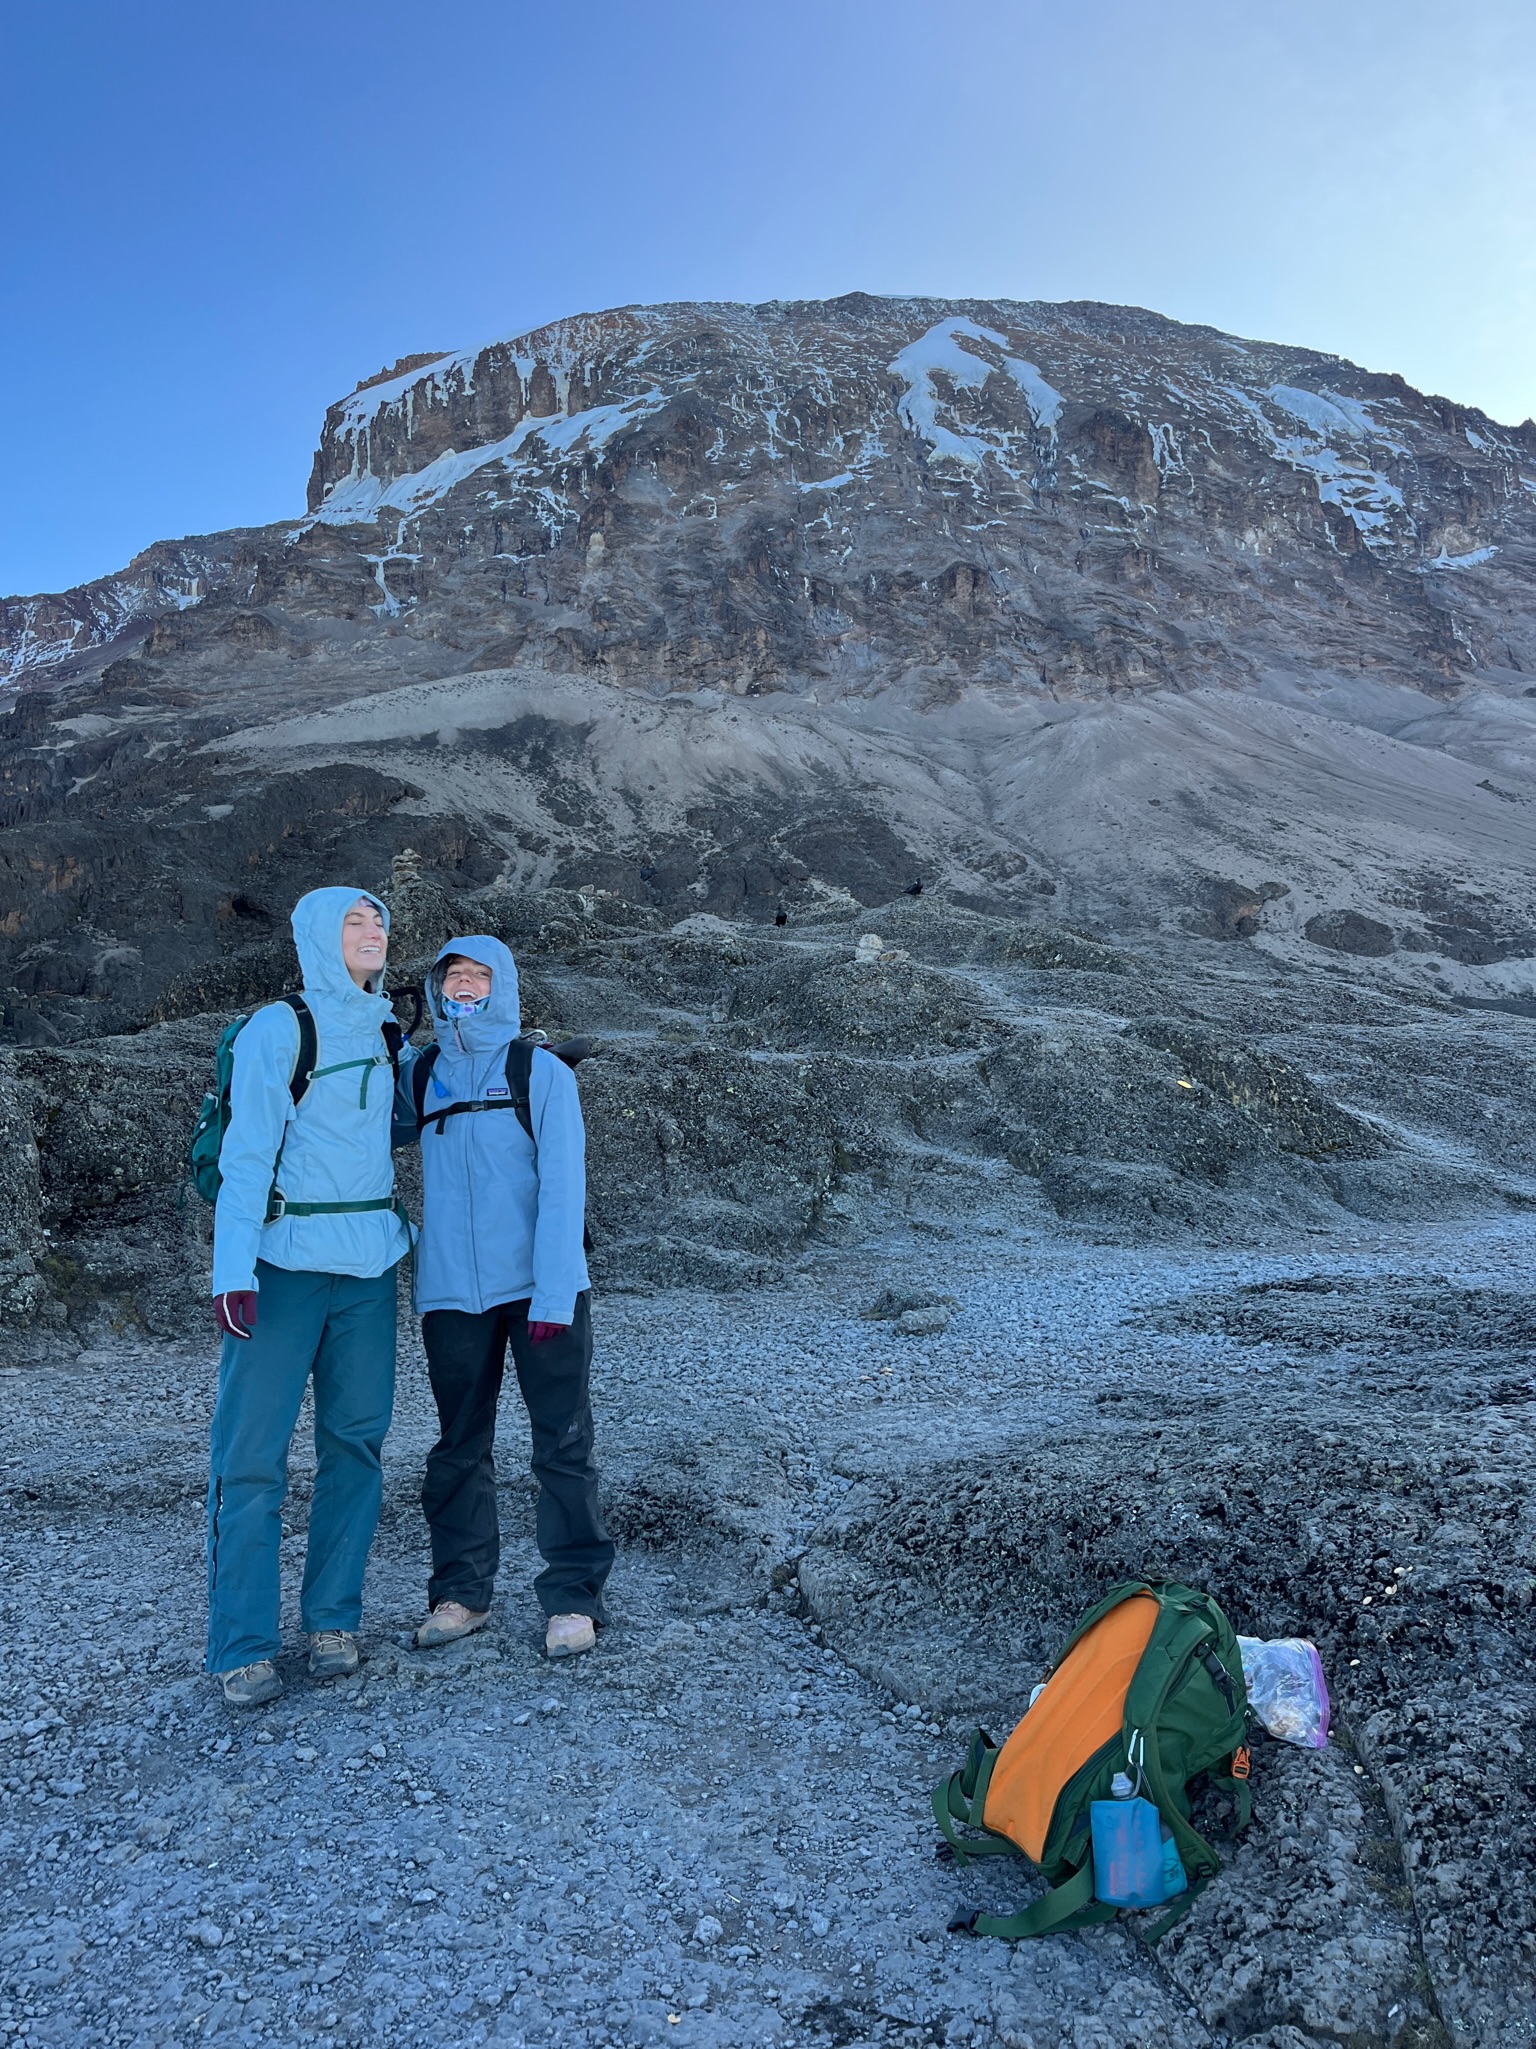 Day 3 on Kilimanjaro